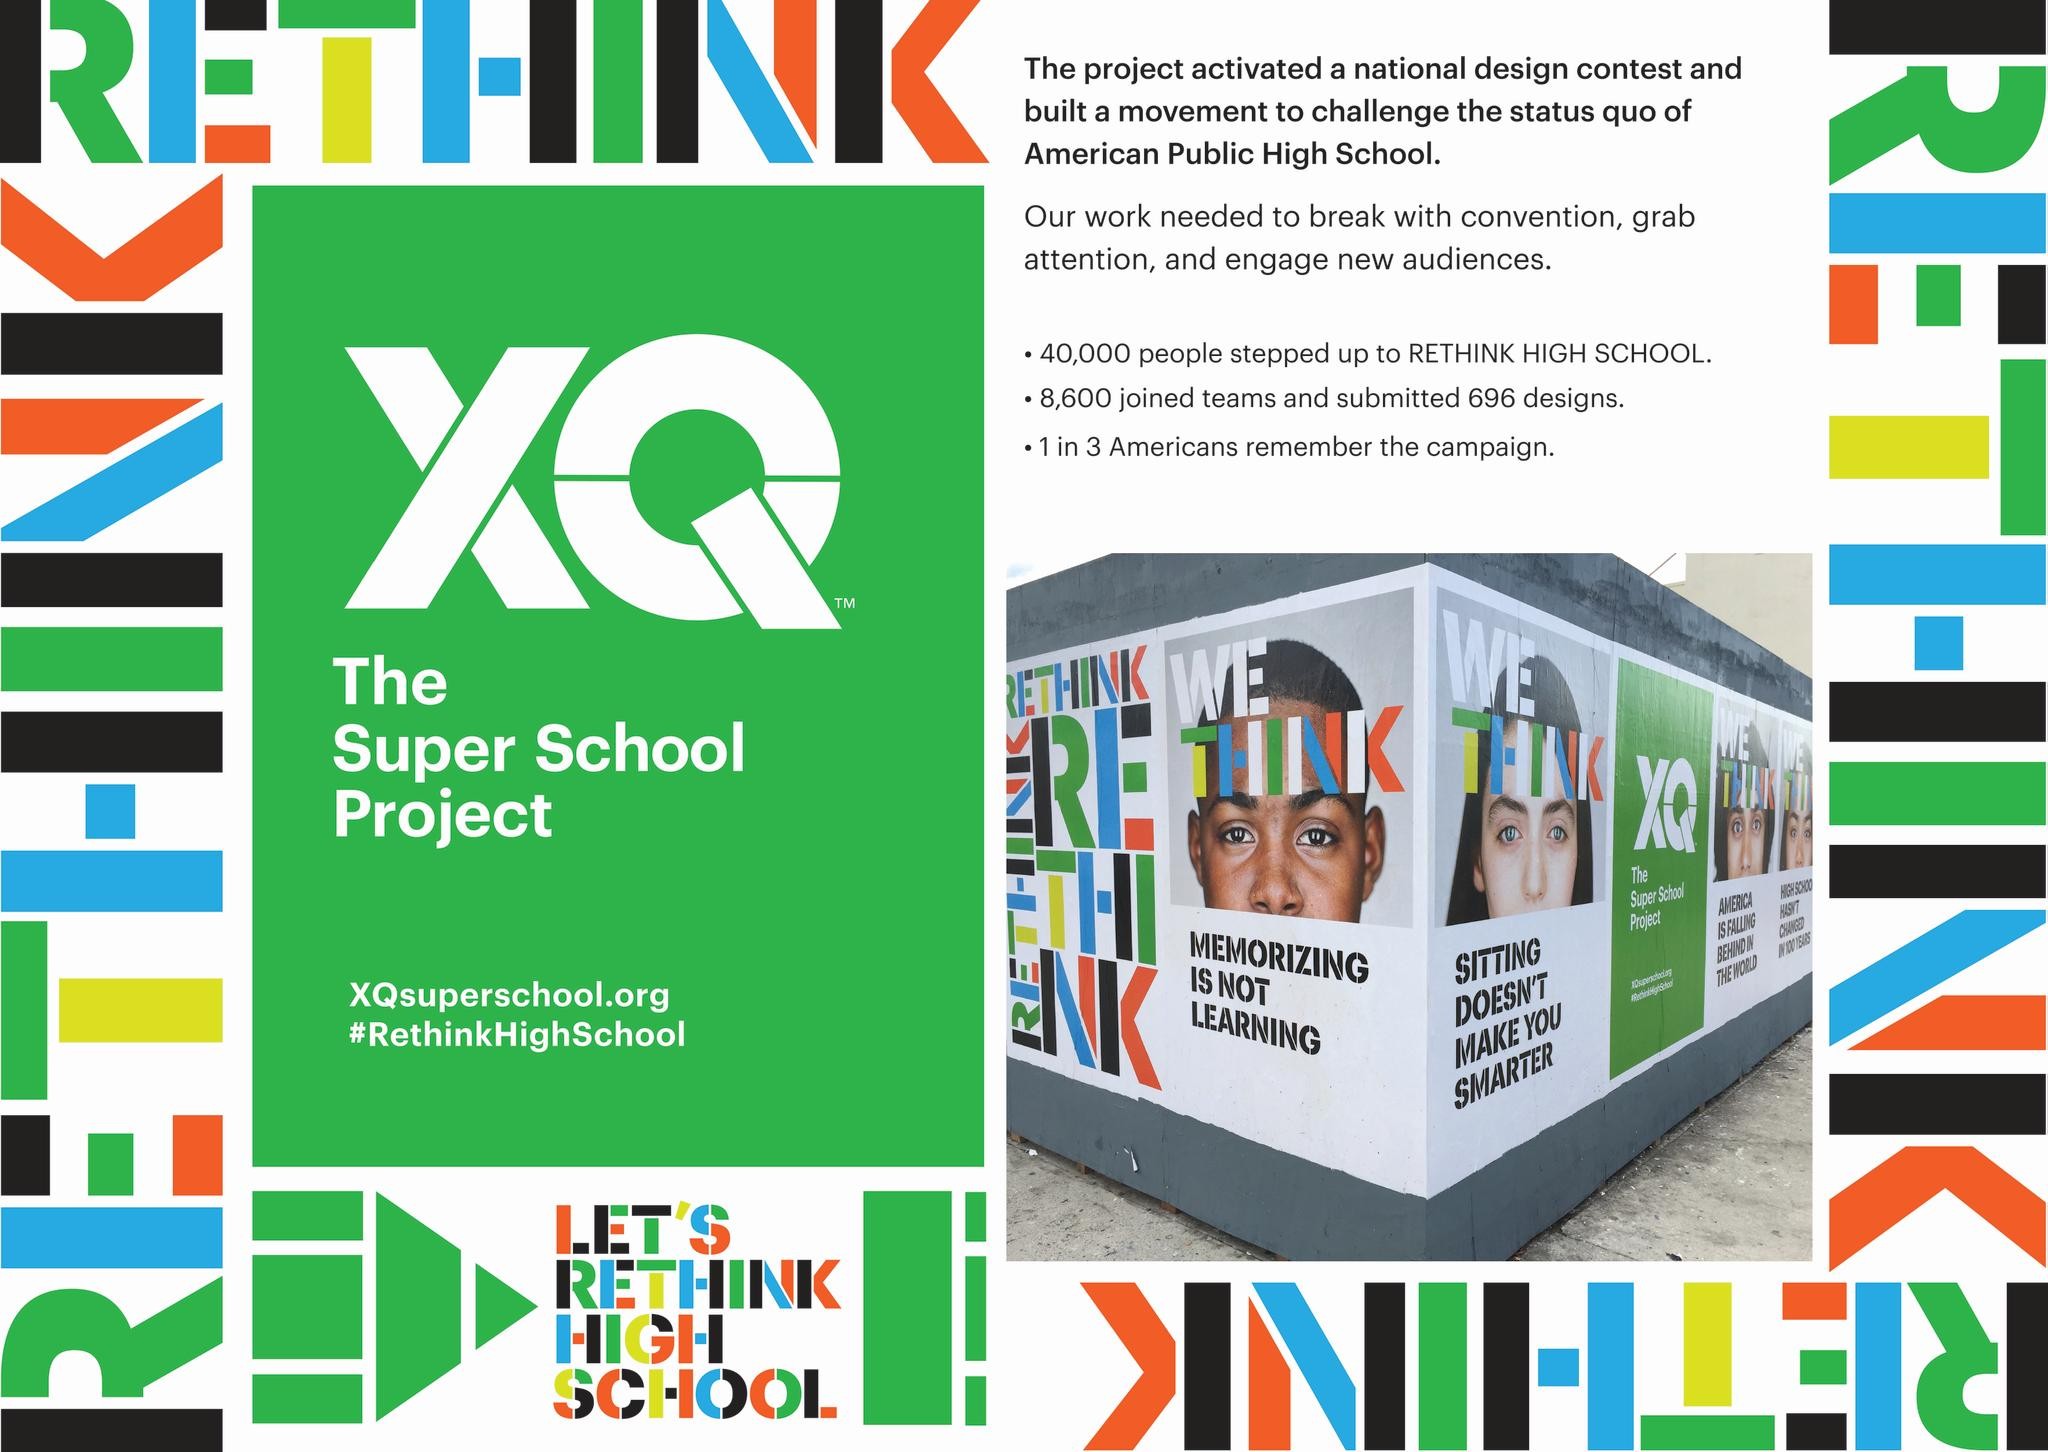 XQ: The Super School Project